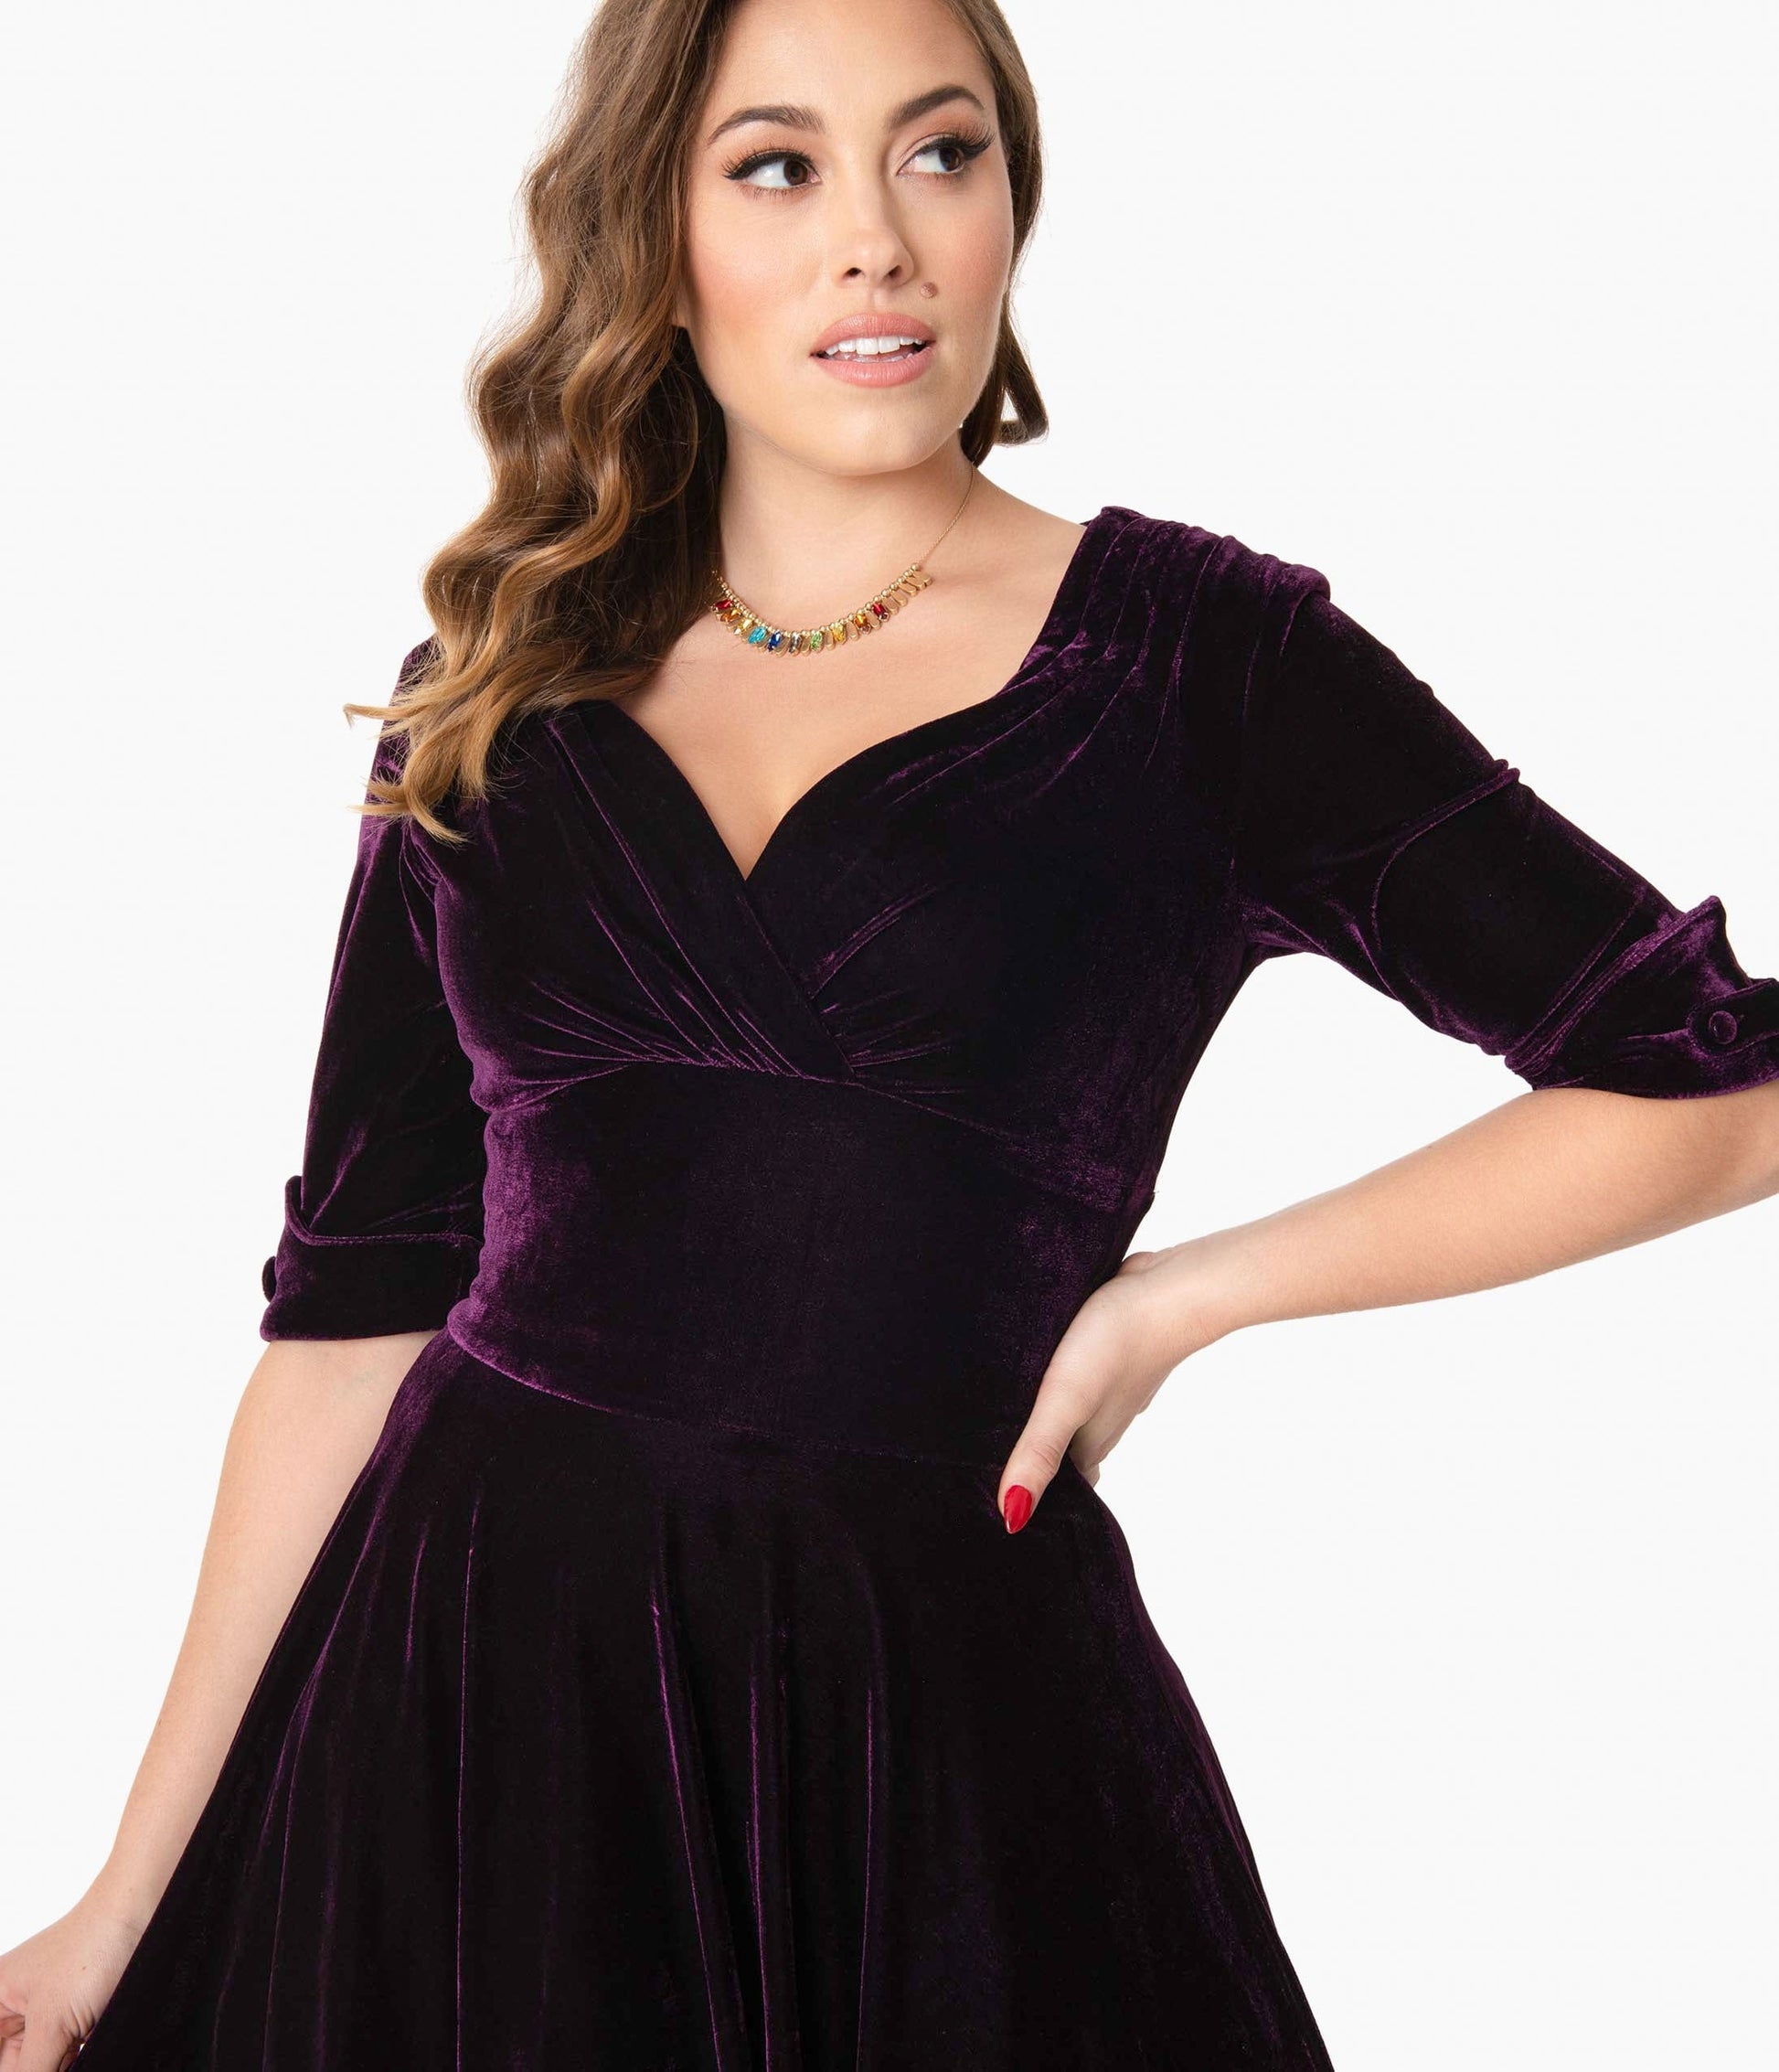 Unique Vintage 1950s Purple Velvet Delores Swing Dress with Sleeves